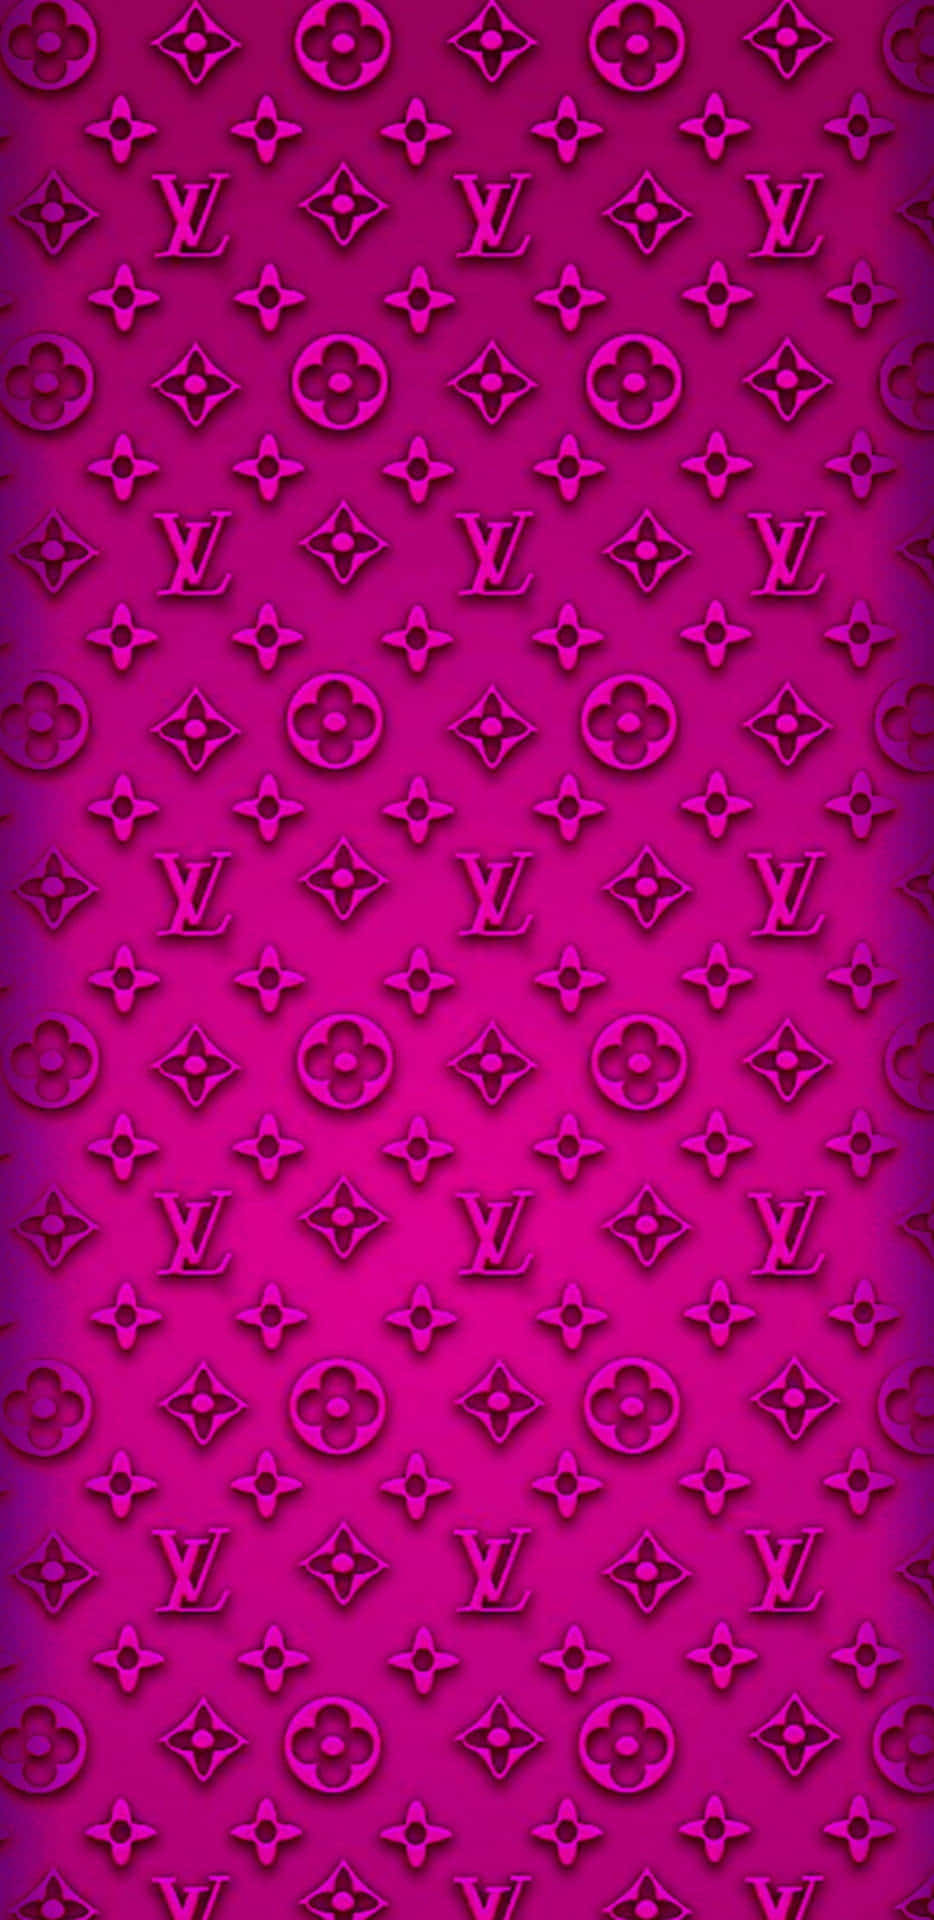 LV neon wallpaper  Neon wallpaper, Cool wallpapers for phones, Louis  vuitton iphone wallpaper